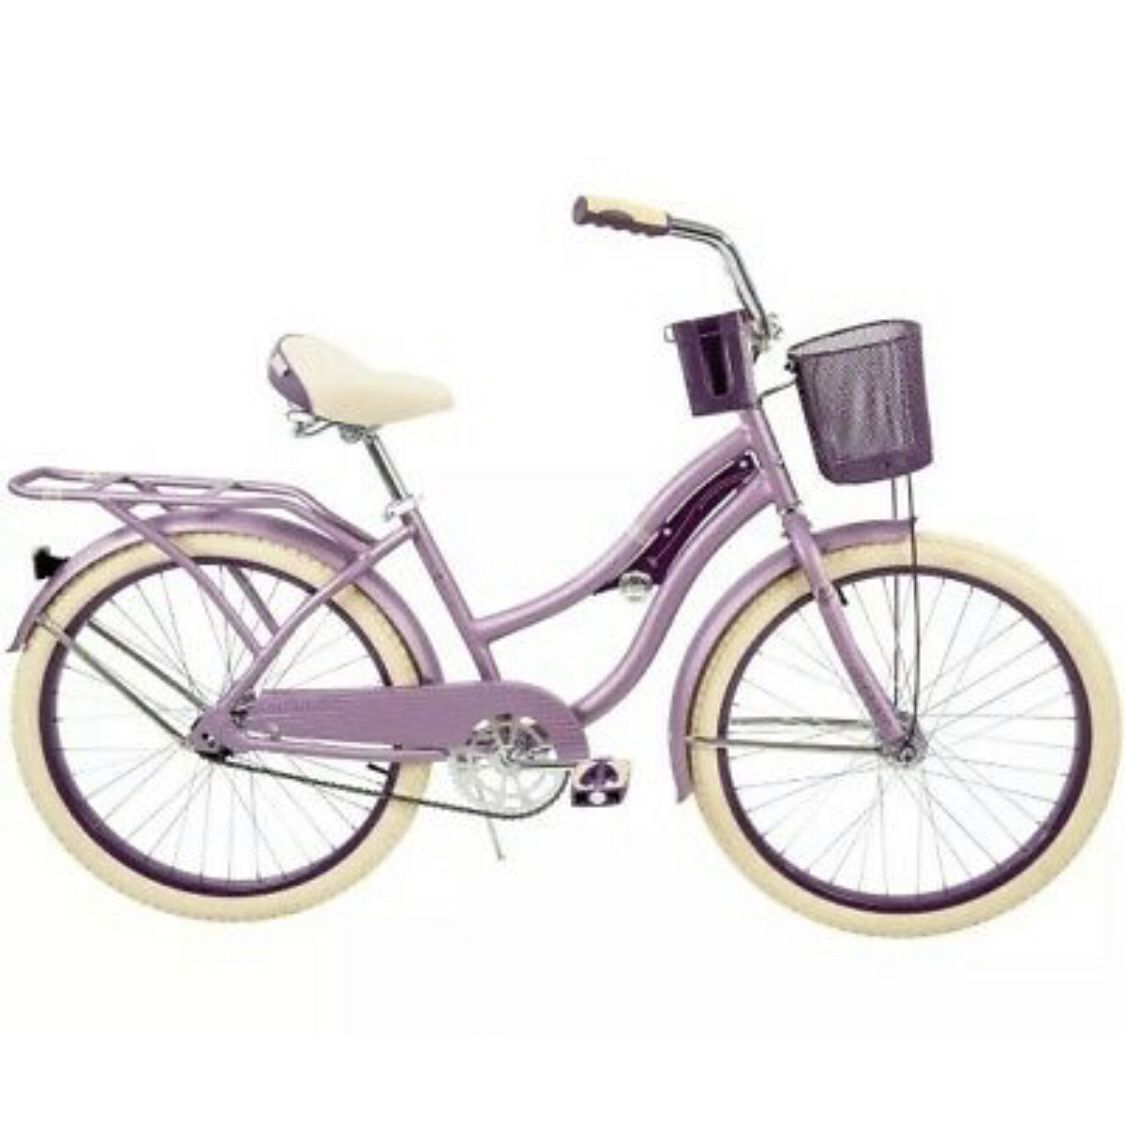 Huffy 24” Nel Lusso Girl’s/Women's Classic Cruiser Bike, Purple Brand New - in Box!